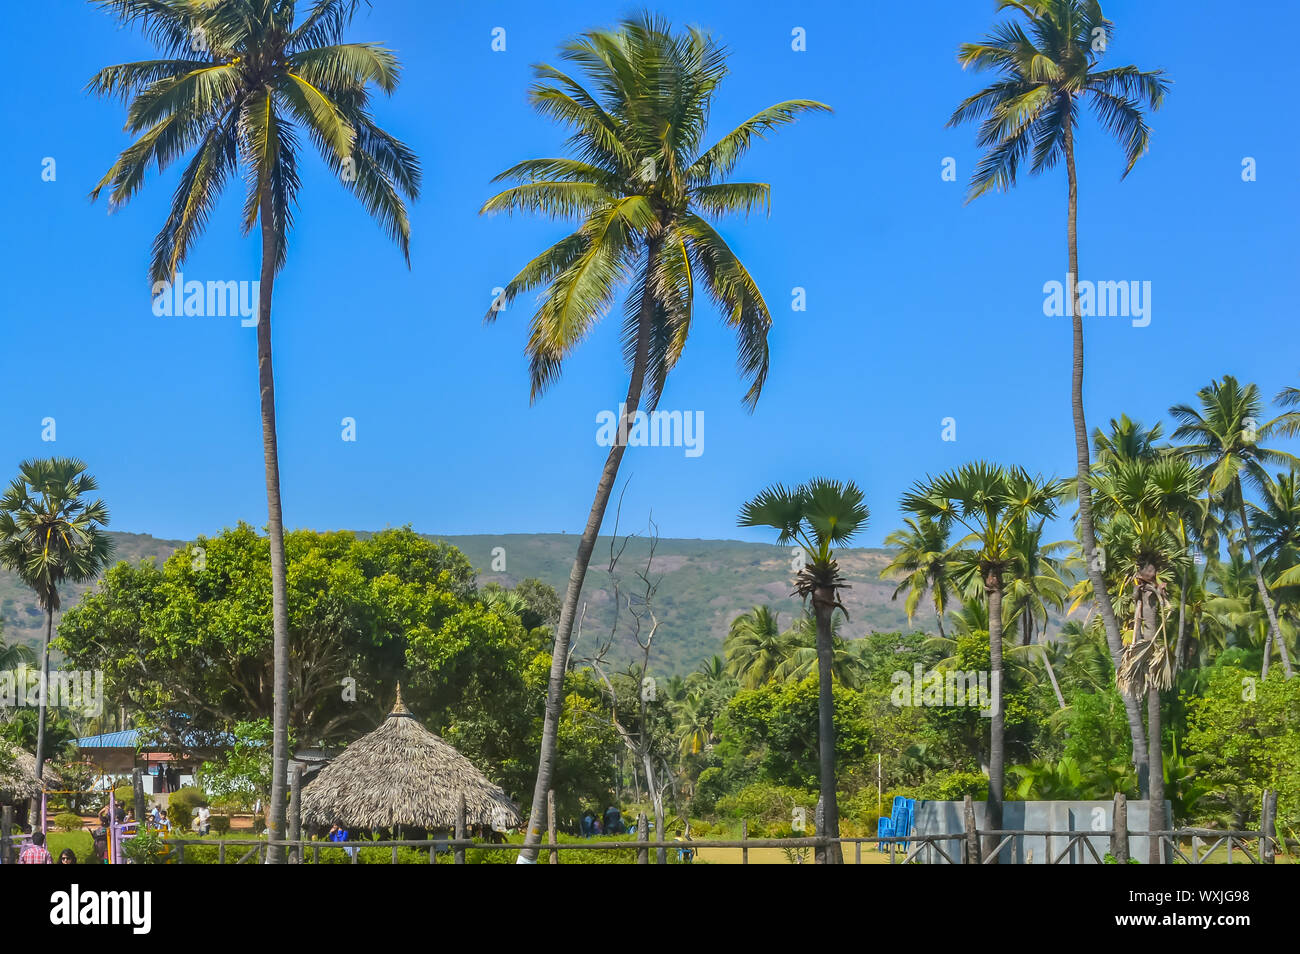 Yarada Beach, Vishakhapatnam, Andhra Pradesh, India December 2018 - Coconut palm trees against blue sky and staw hut on a tropical island. Its a popul Stock Photo